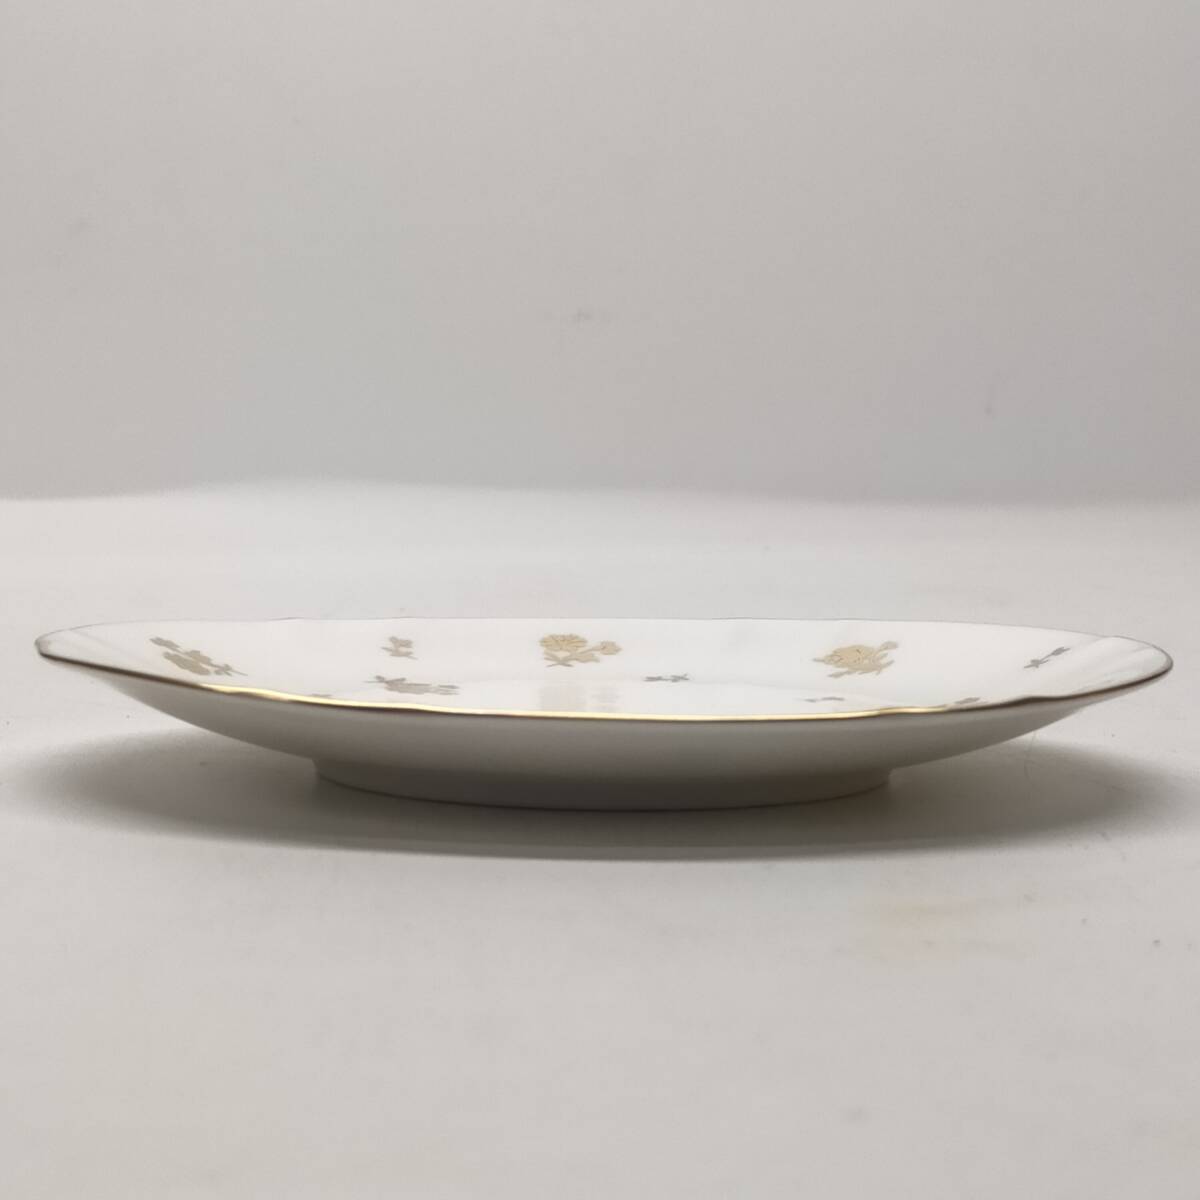 WAKO plate 6 шт. комплект золотая краска белый не использовался товар Гиндза Wako wako- кекс тарелка кекс plate маленькая тарелка брать . тарелка 